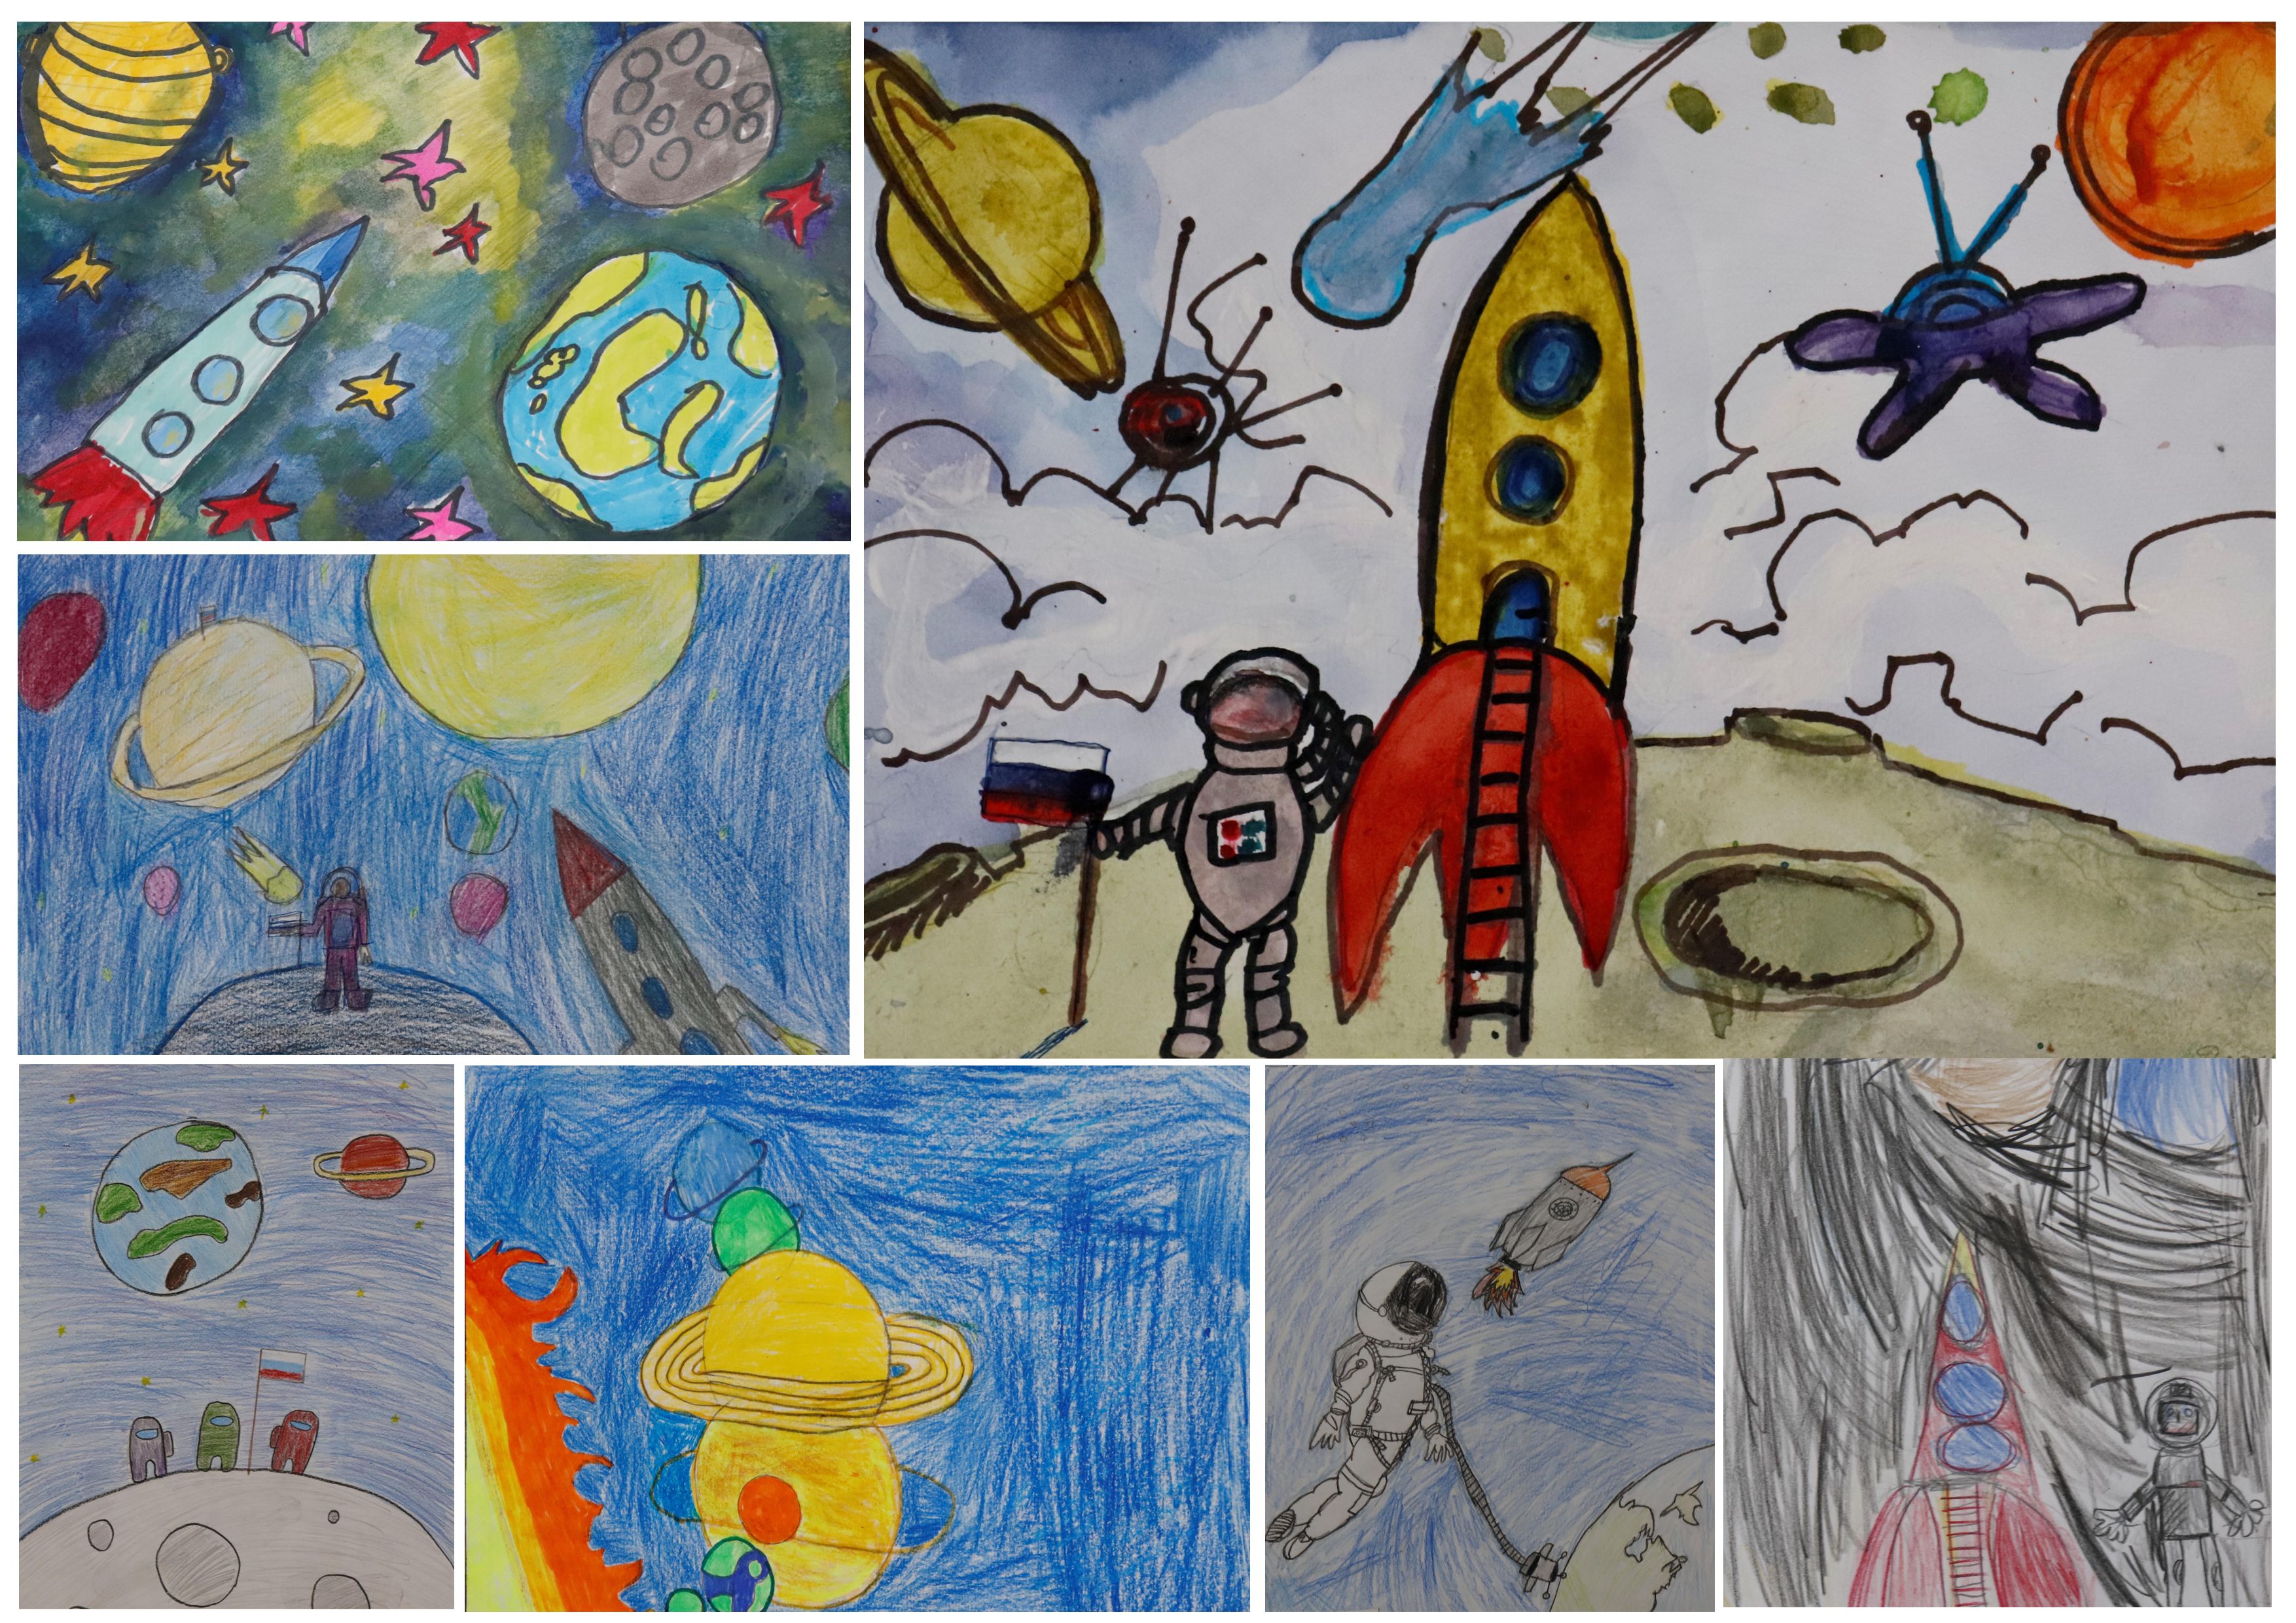 Конкурс детских рисунков ко дню космонавтики. Выставка рисунков ко Дню космонавтики. Выставка детских рисунков ко Дню космонавтики. Конкурс рисунков ко Дню космонавтики. Конкурс рисунков к Дню космонавтики для детей.